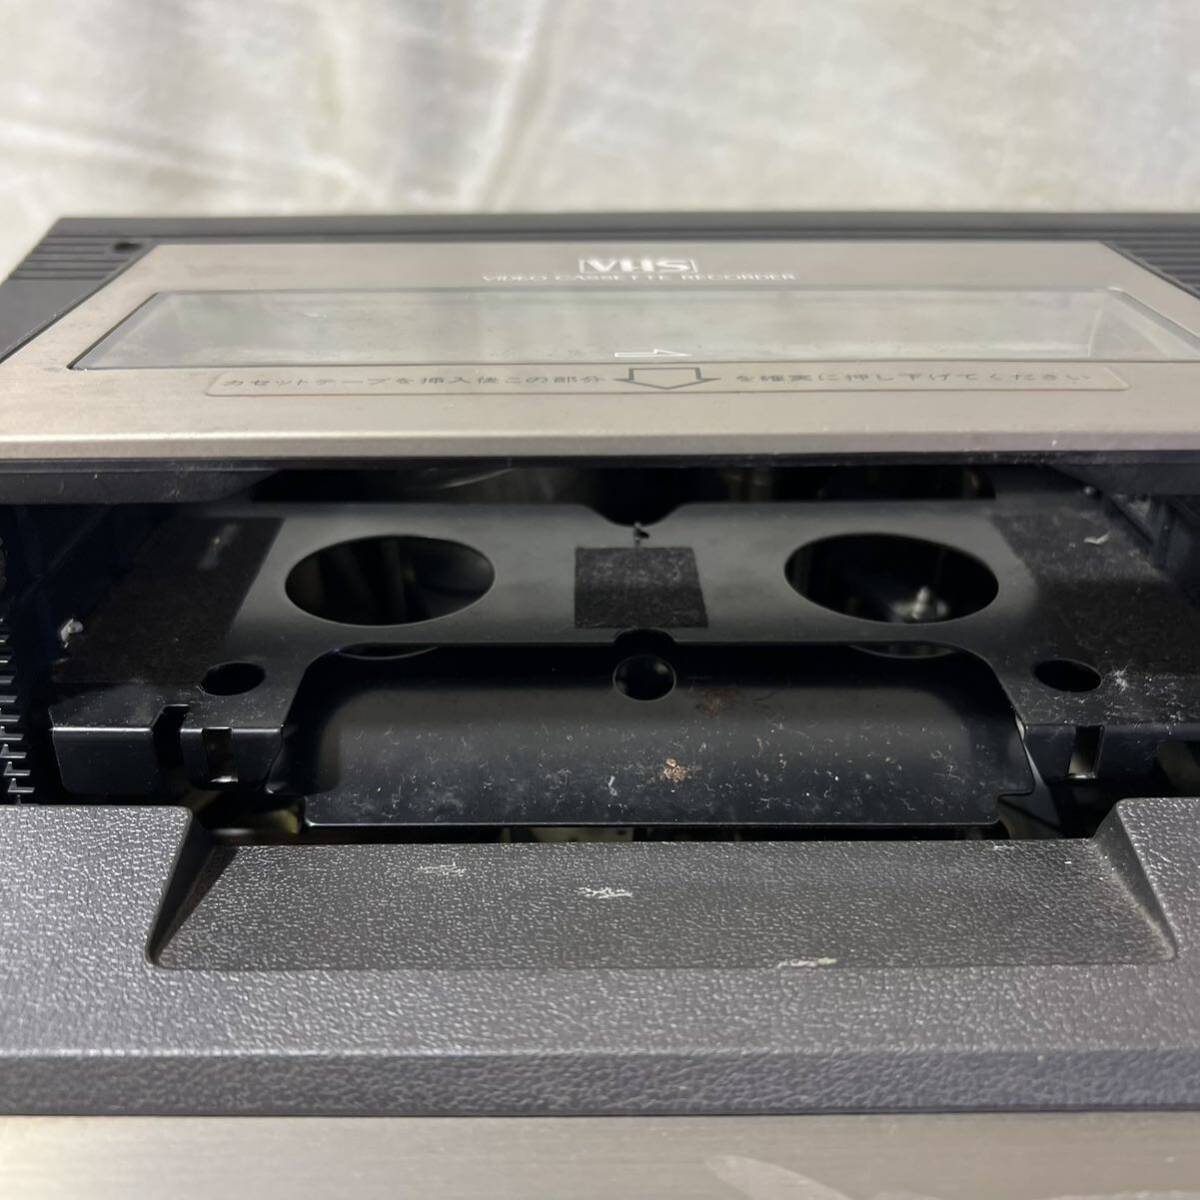 C997 Victor ビクター VHSビデオカセットレコーダー HR-3600 コード無し 通電確認無し _画像10